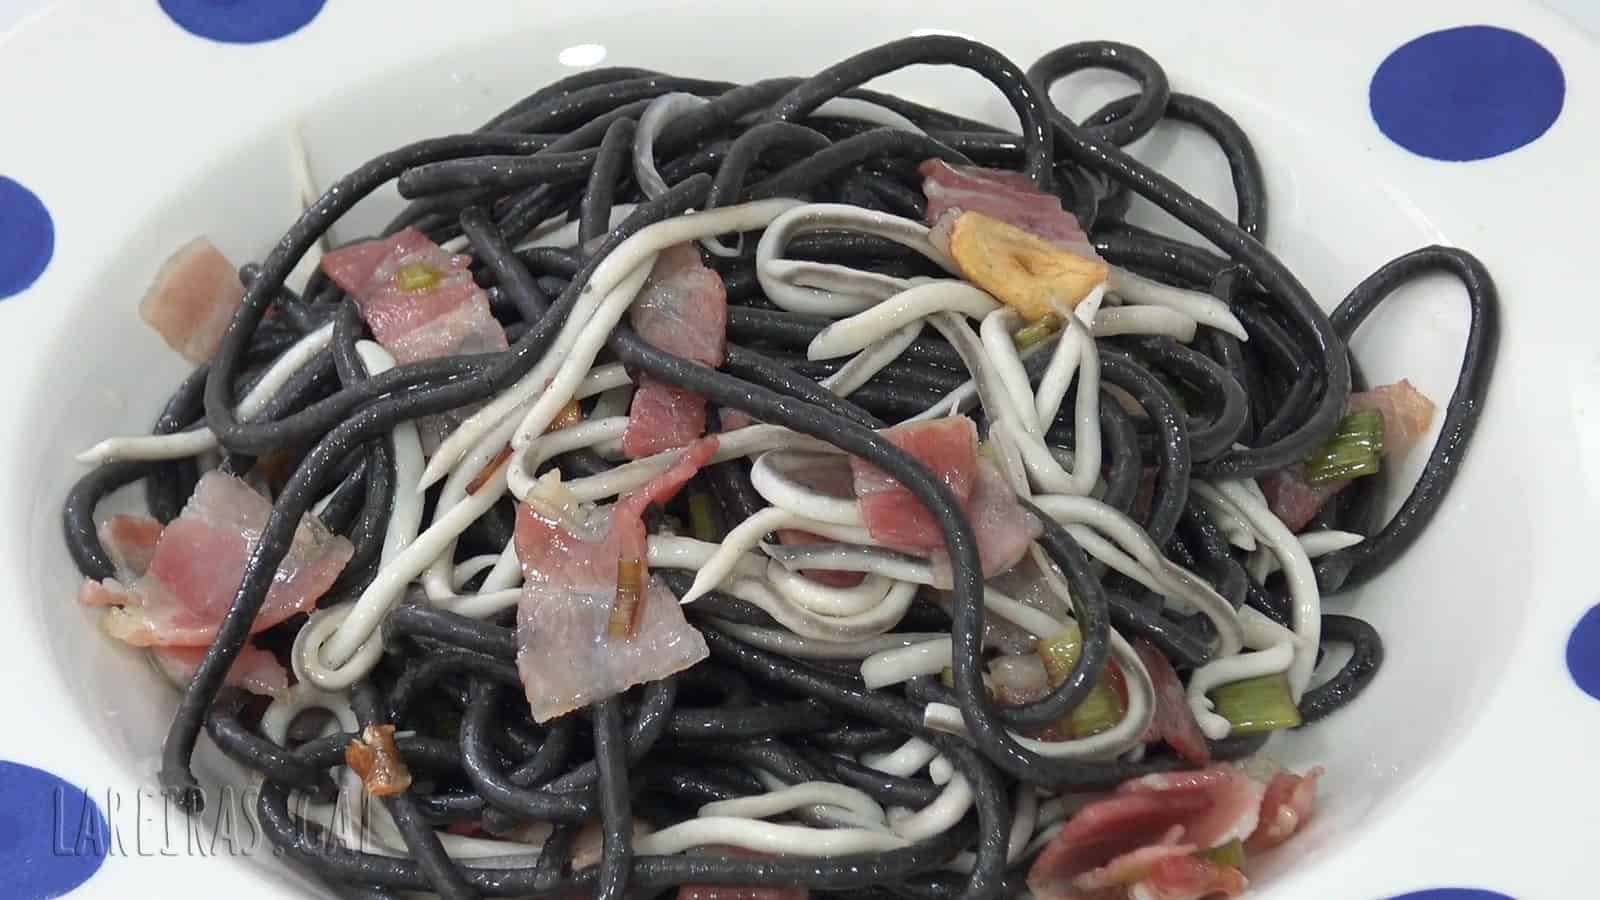 Sautéed black spaghetti with bacon and surimi elvers